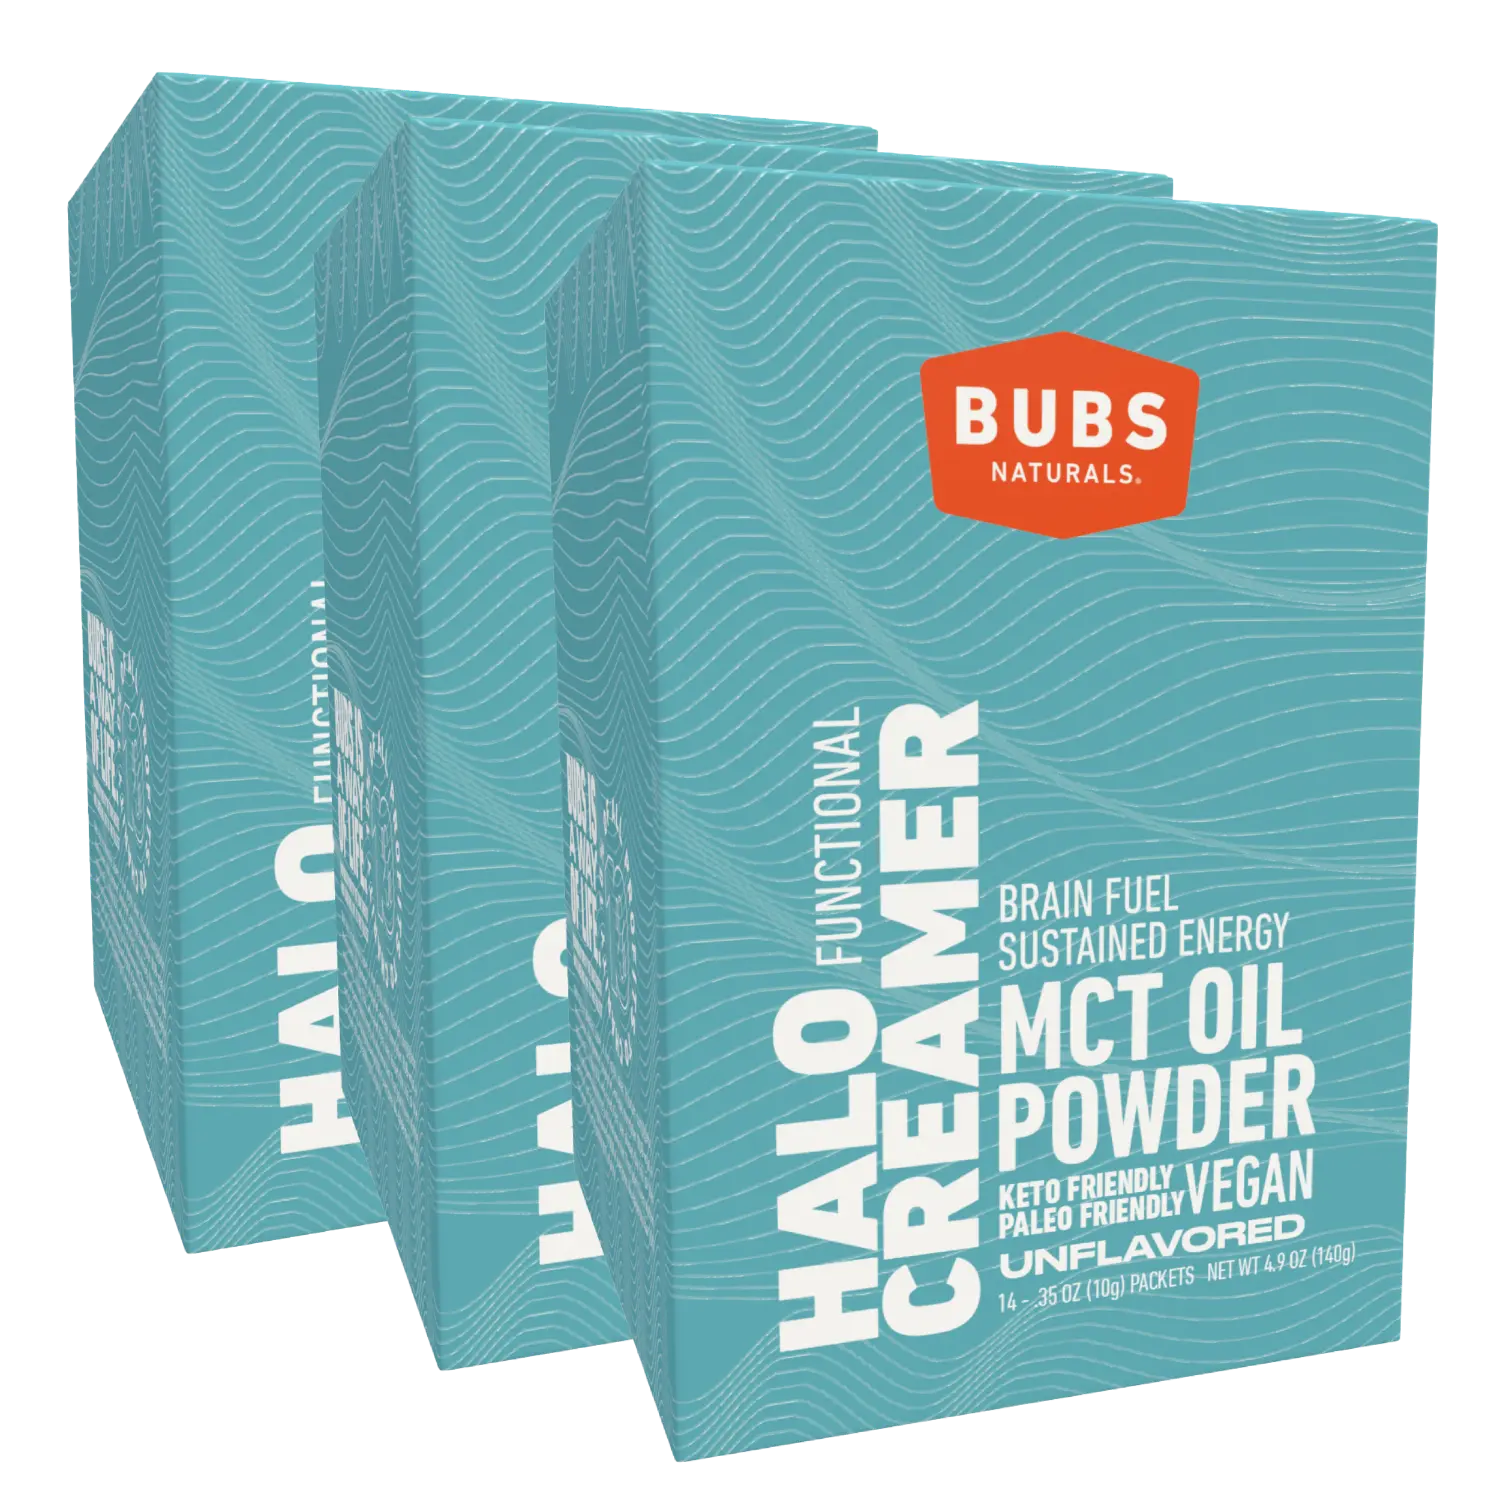 BUBS Naturals MCT Oil Powder, Vegan Halo Functional Creamer, 14ct travel pack, bundle of 3